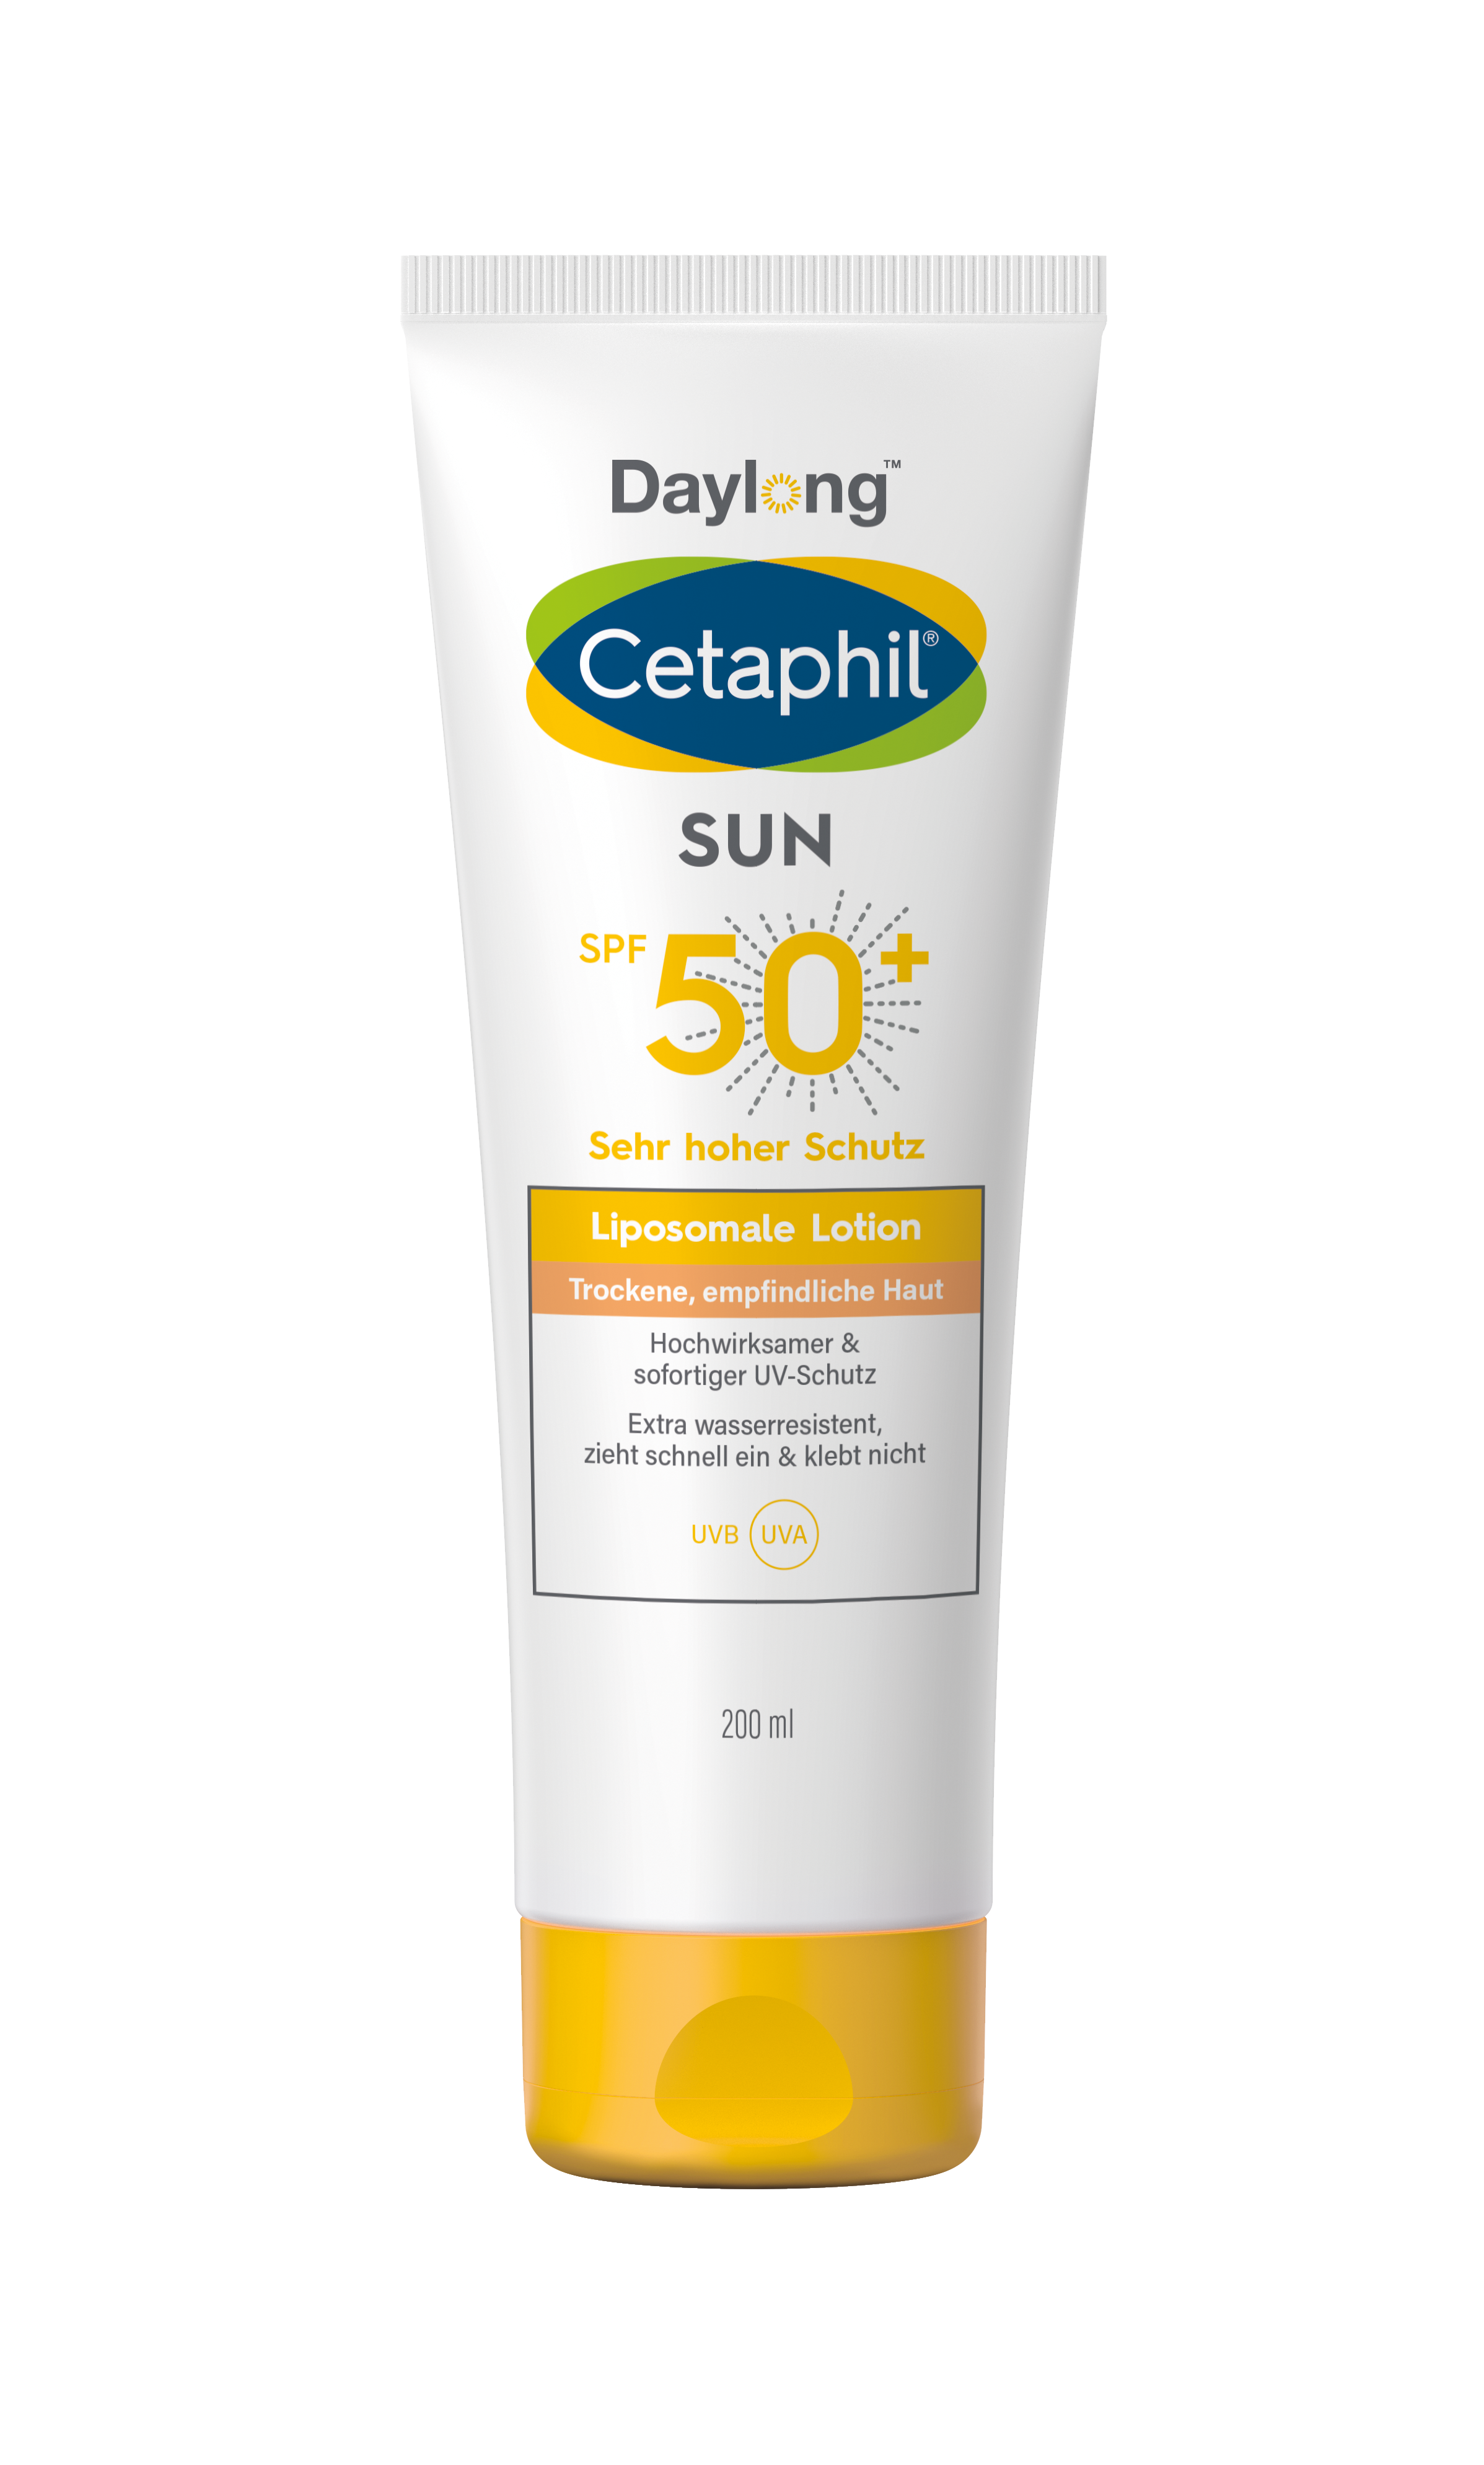 Cetaphil Sun Daylong SPF 50+ Liposomale Lotion (200 ml)